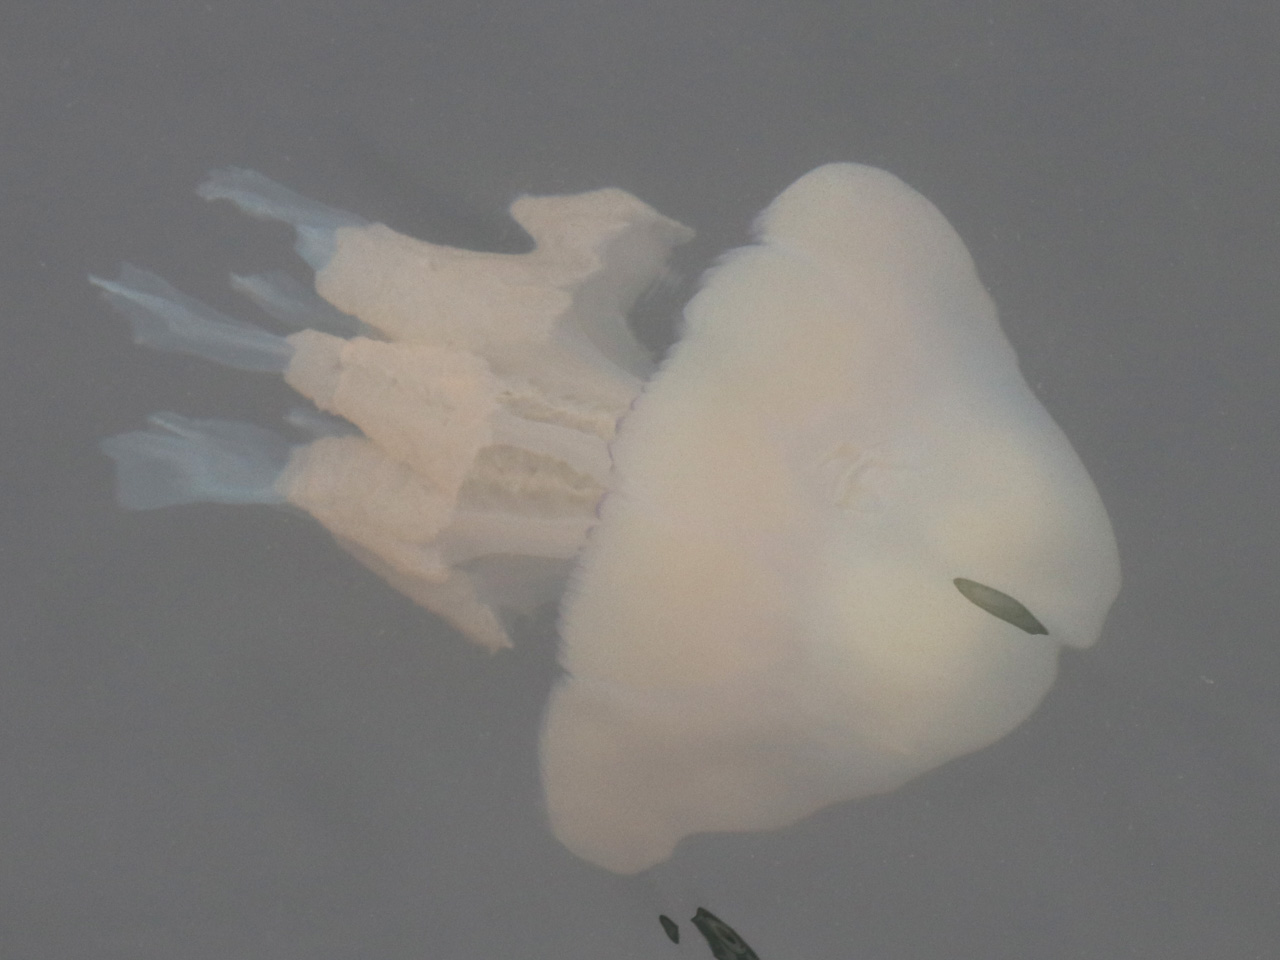 A huge barrel jellyfish gliding through the sea